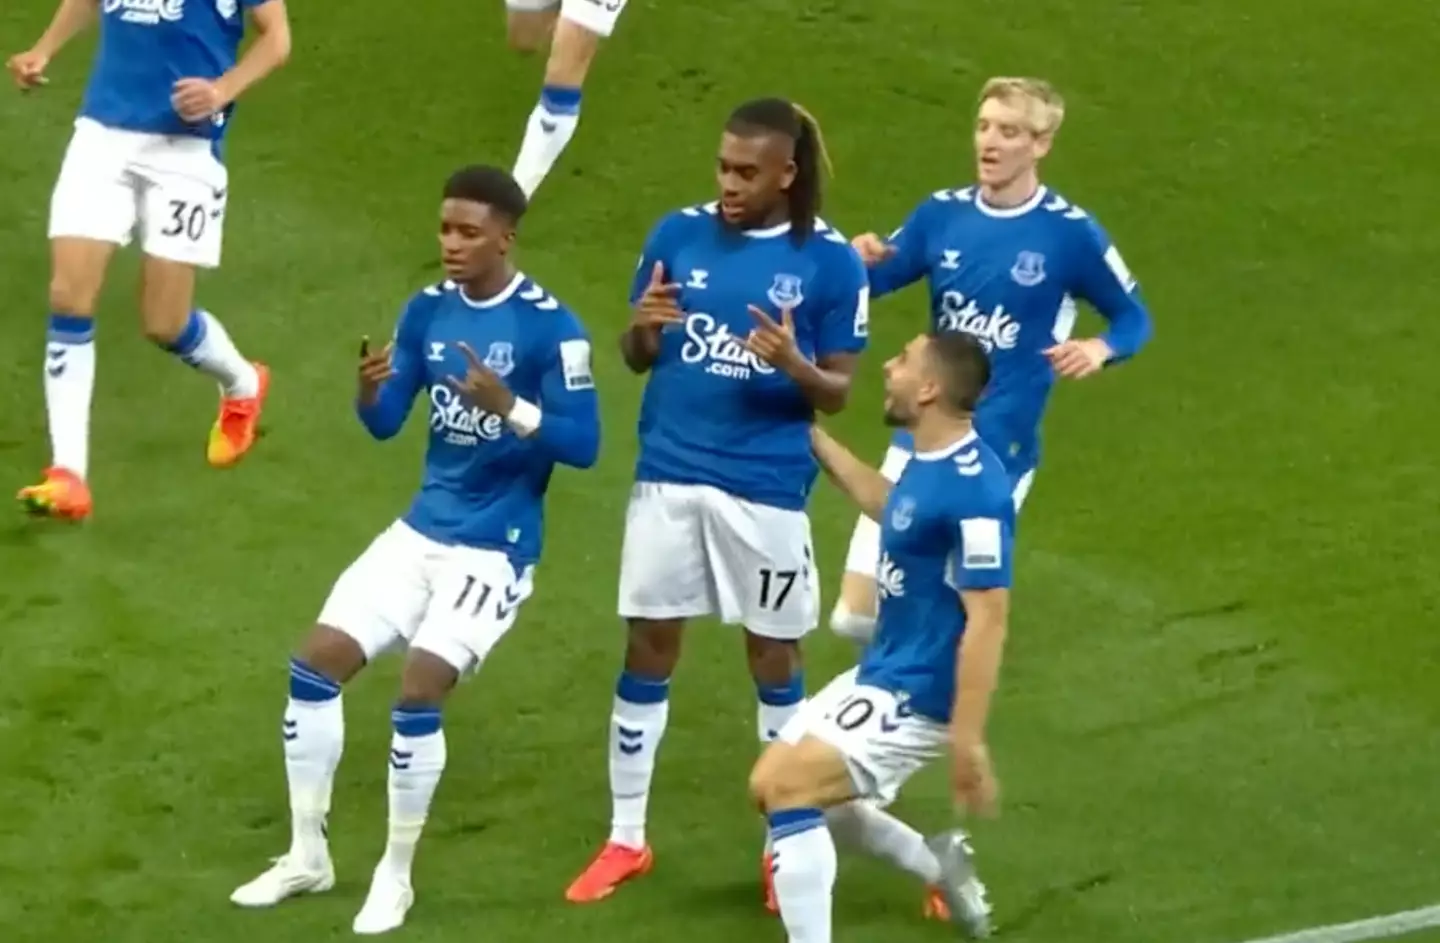 Iwobi celebrates his opening goal with his Everton teammates.